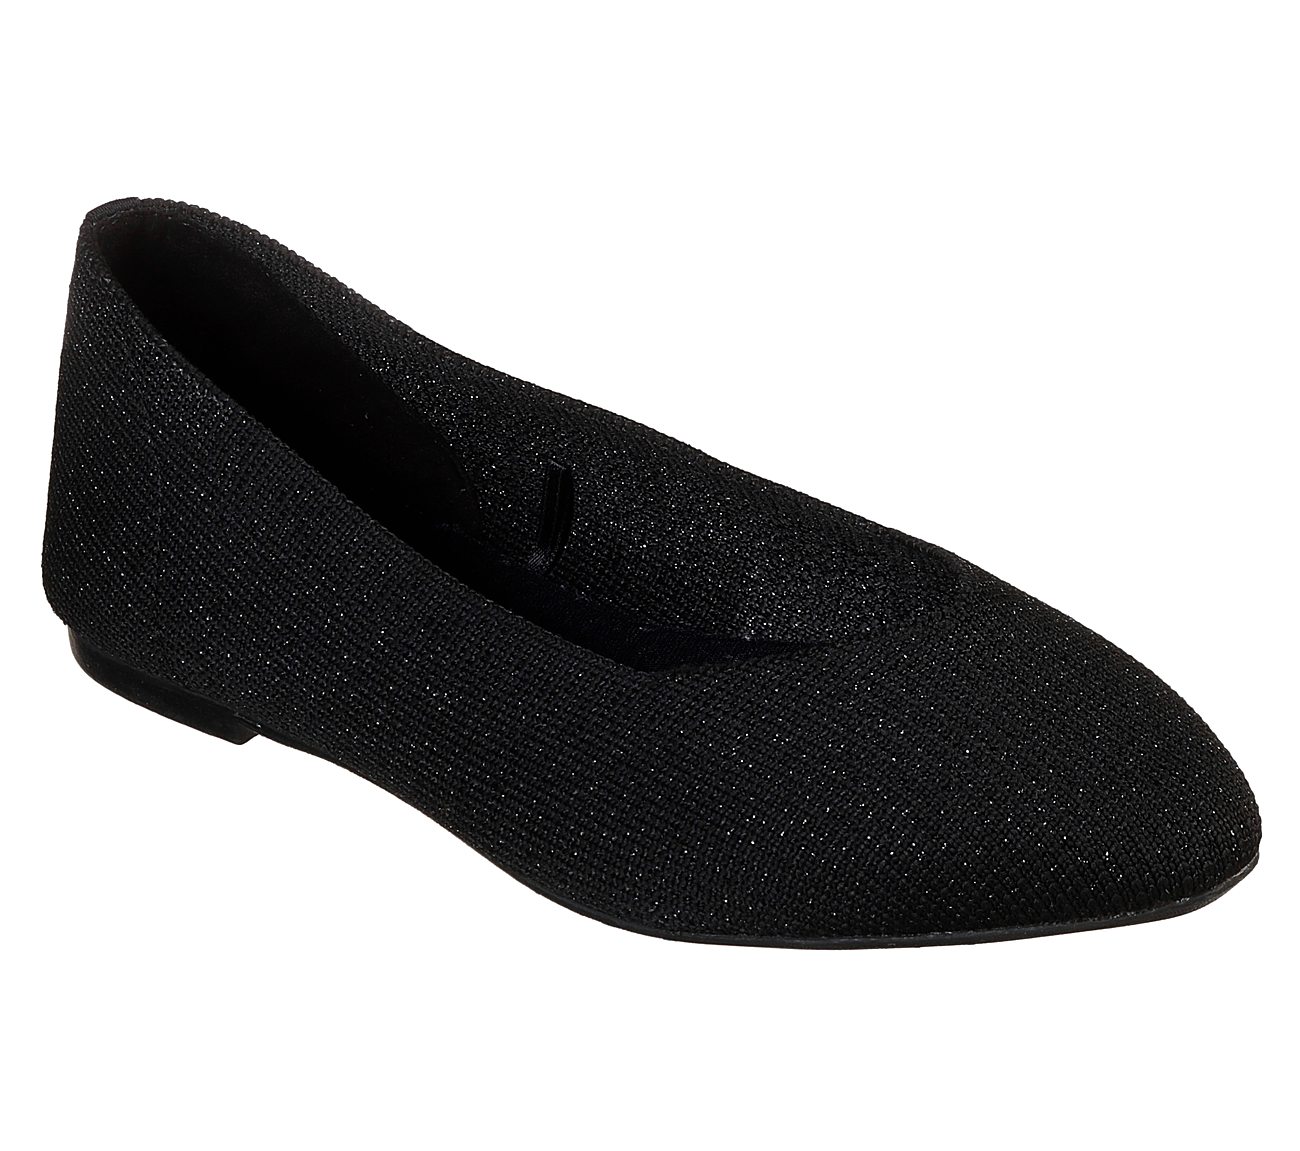 SKECHERS Cleo - Skokie Modern Comfort Shoes